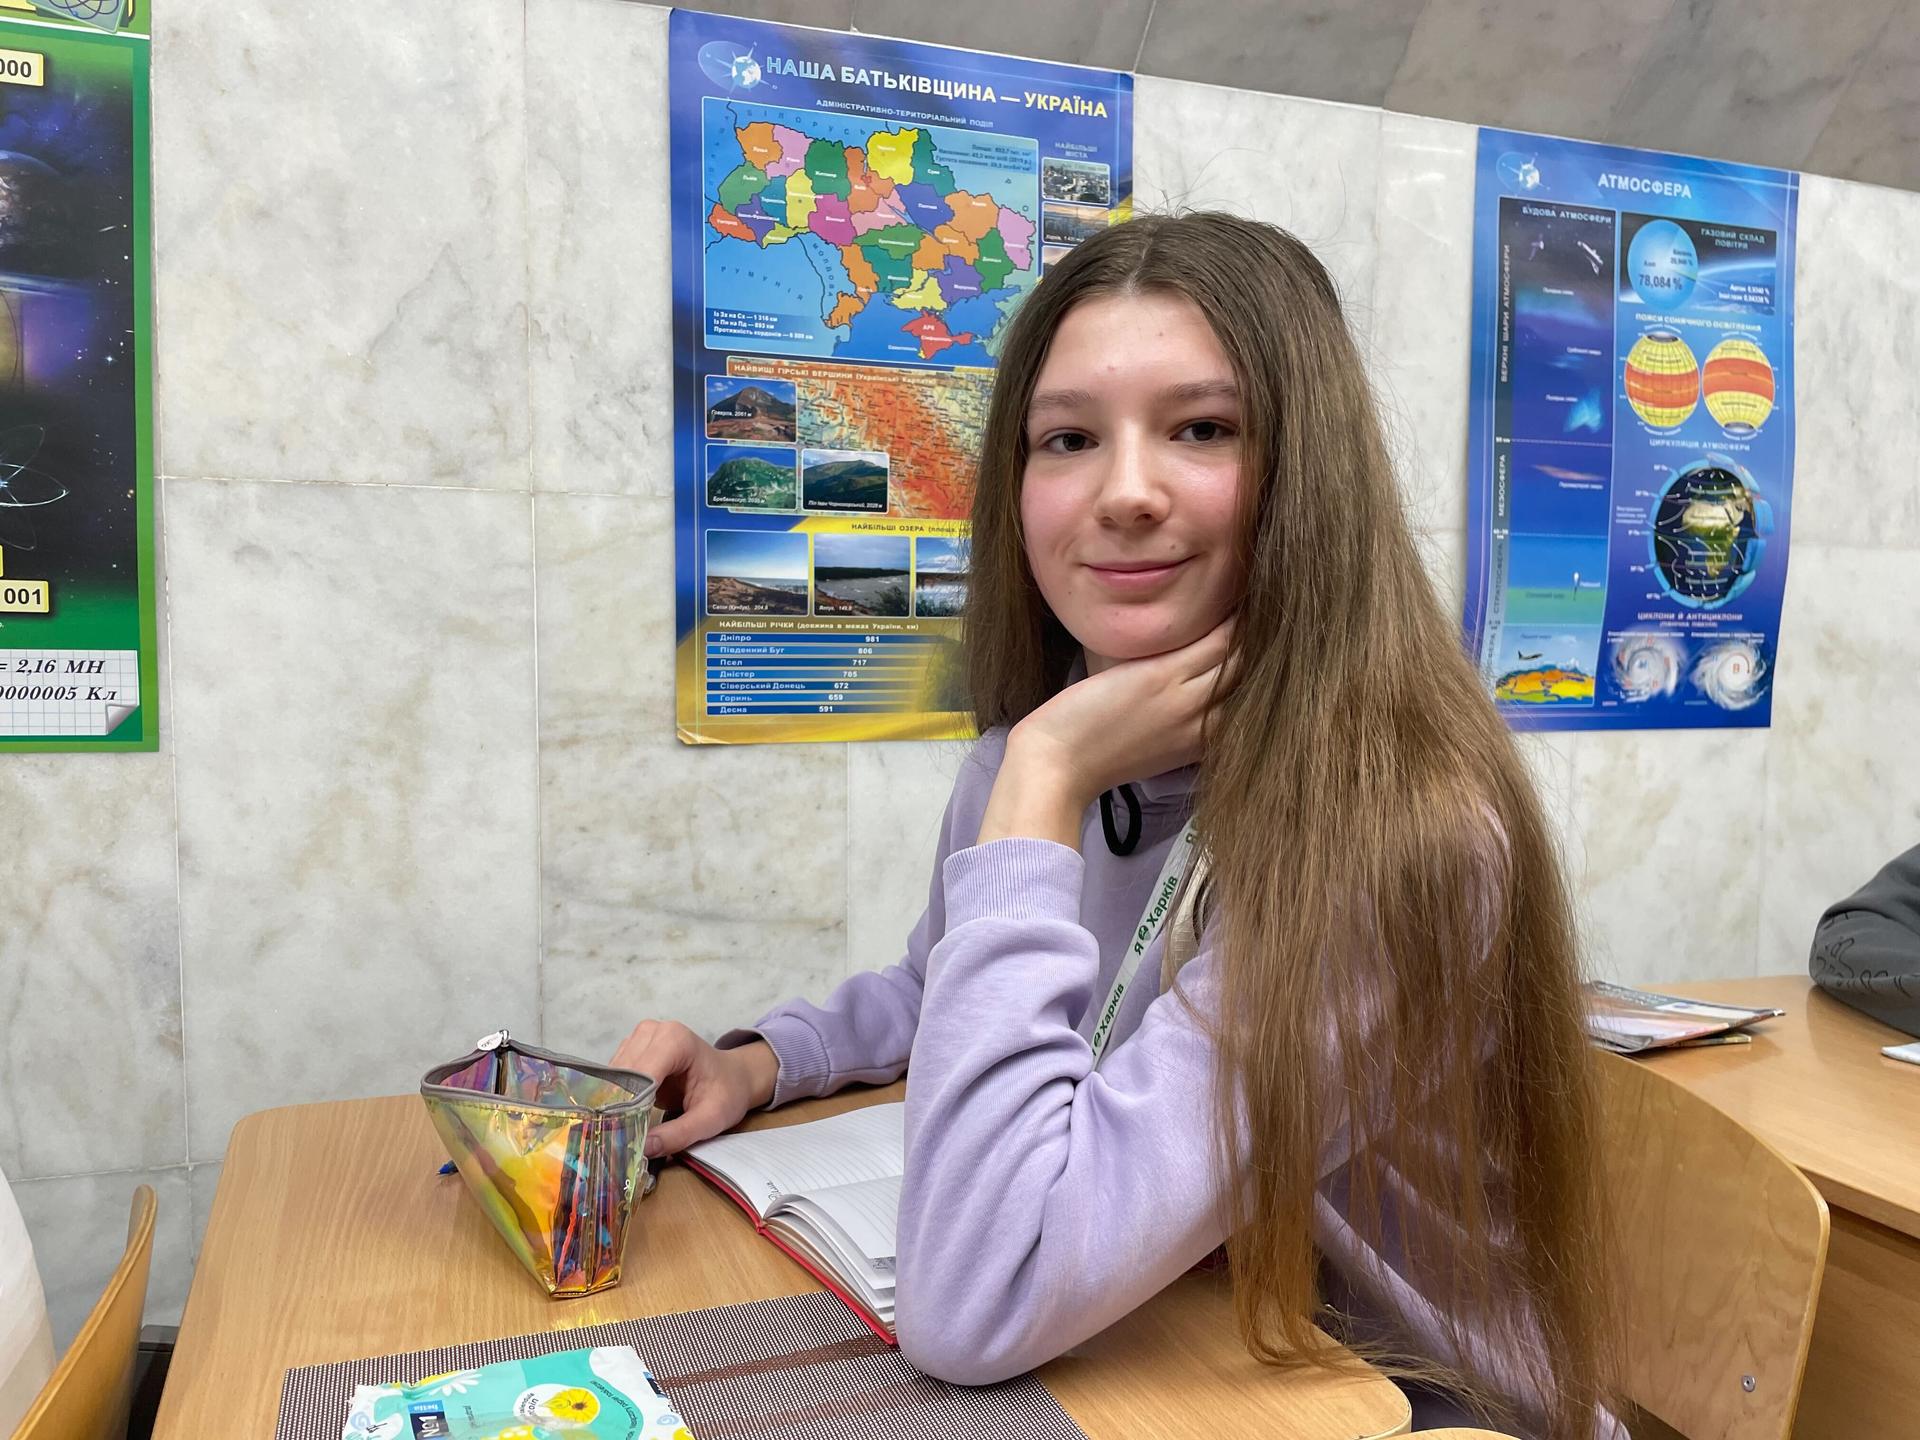 Anastasiia Doroshenko is a 9th grader who studies in Kharkiv's underground school system.